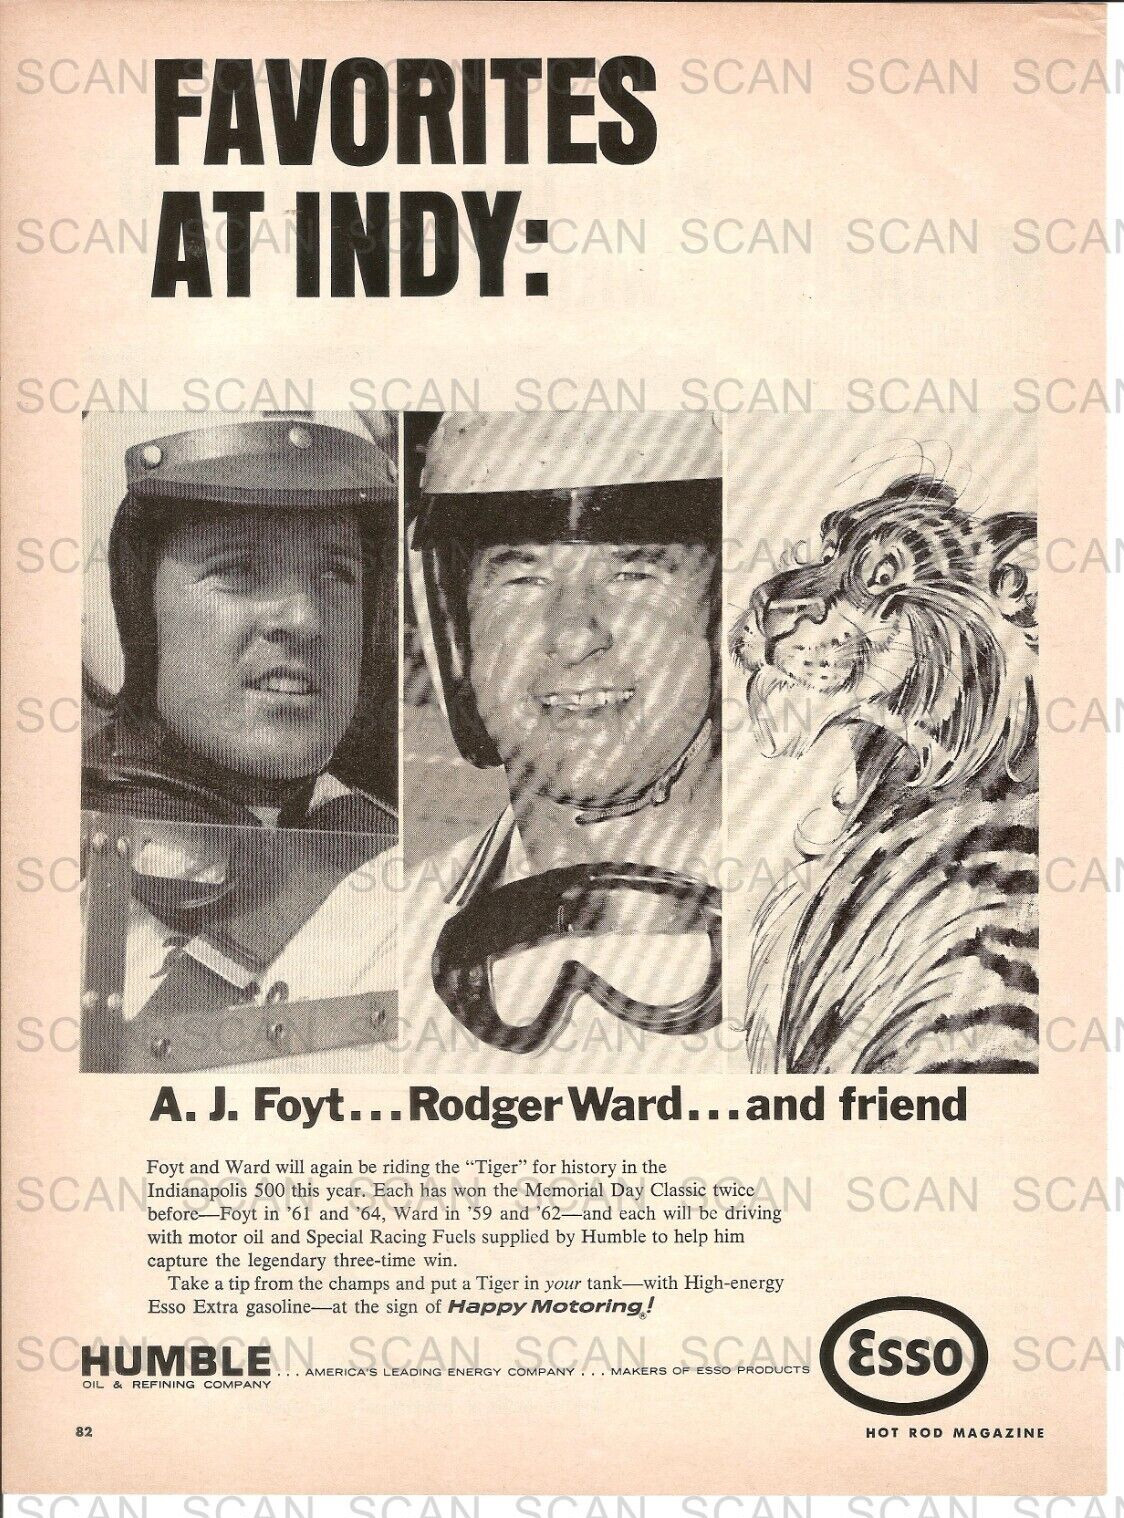 1965 Esso Gasoline Vintage Magazine Ad Humble Oil Co.  Indianapolis 500  AJ Foyt